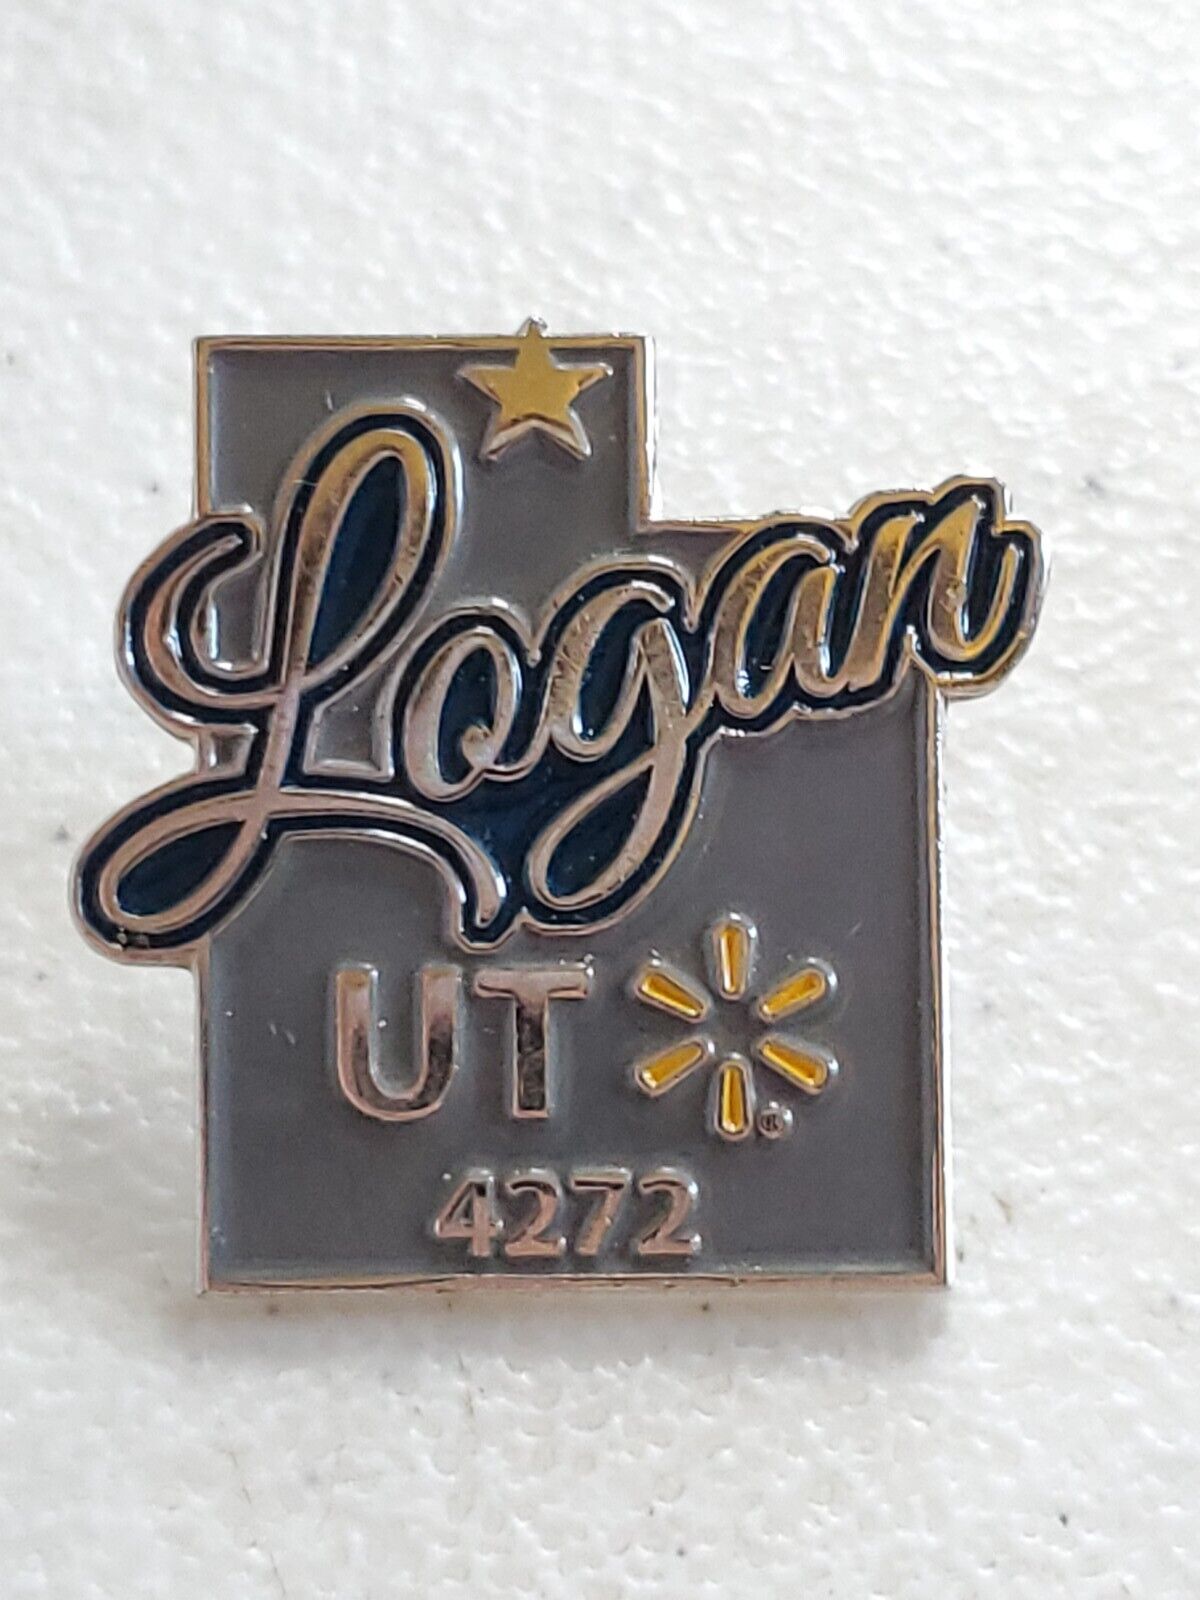 Logan Utah Walmart Employee Pin Store #4272 Utah Shaped Enamel Lapel Hogeye 2016